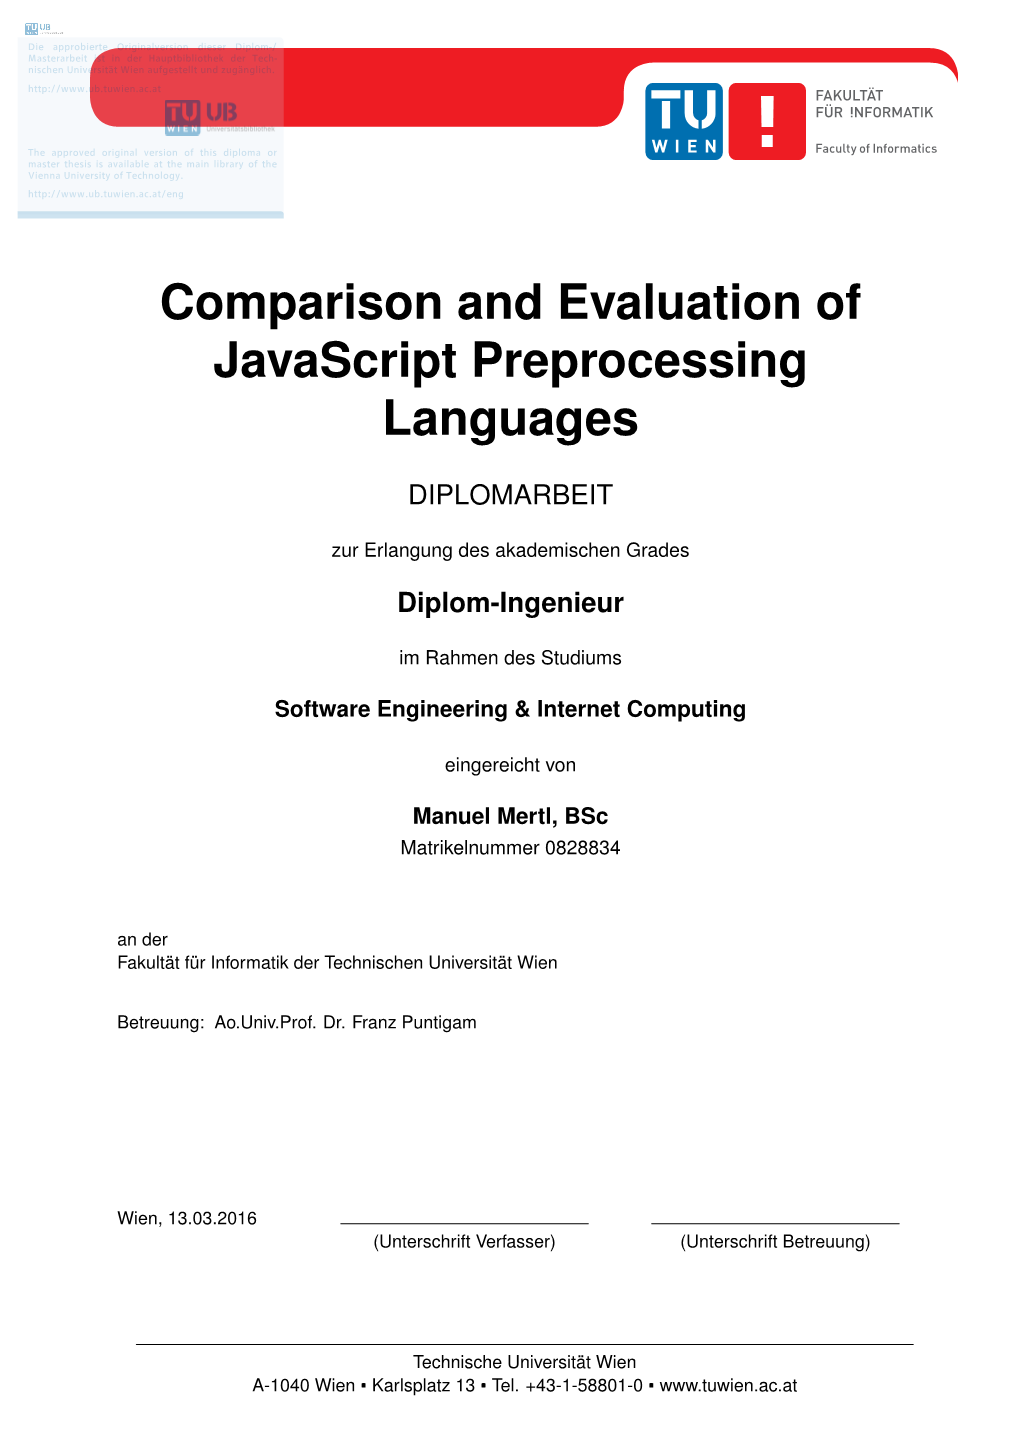 Comparison and Evaluation of Javascript Preprocessing Languages